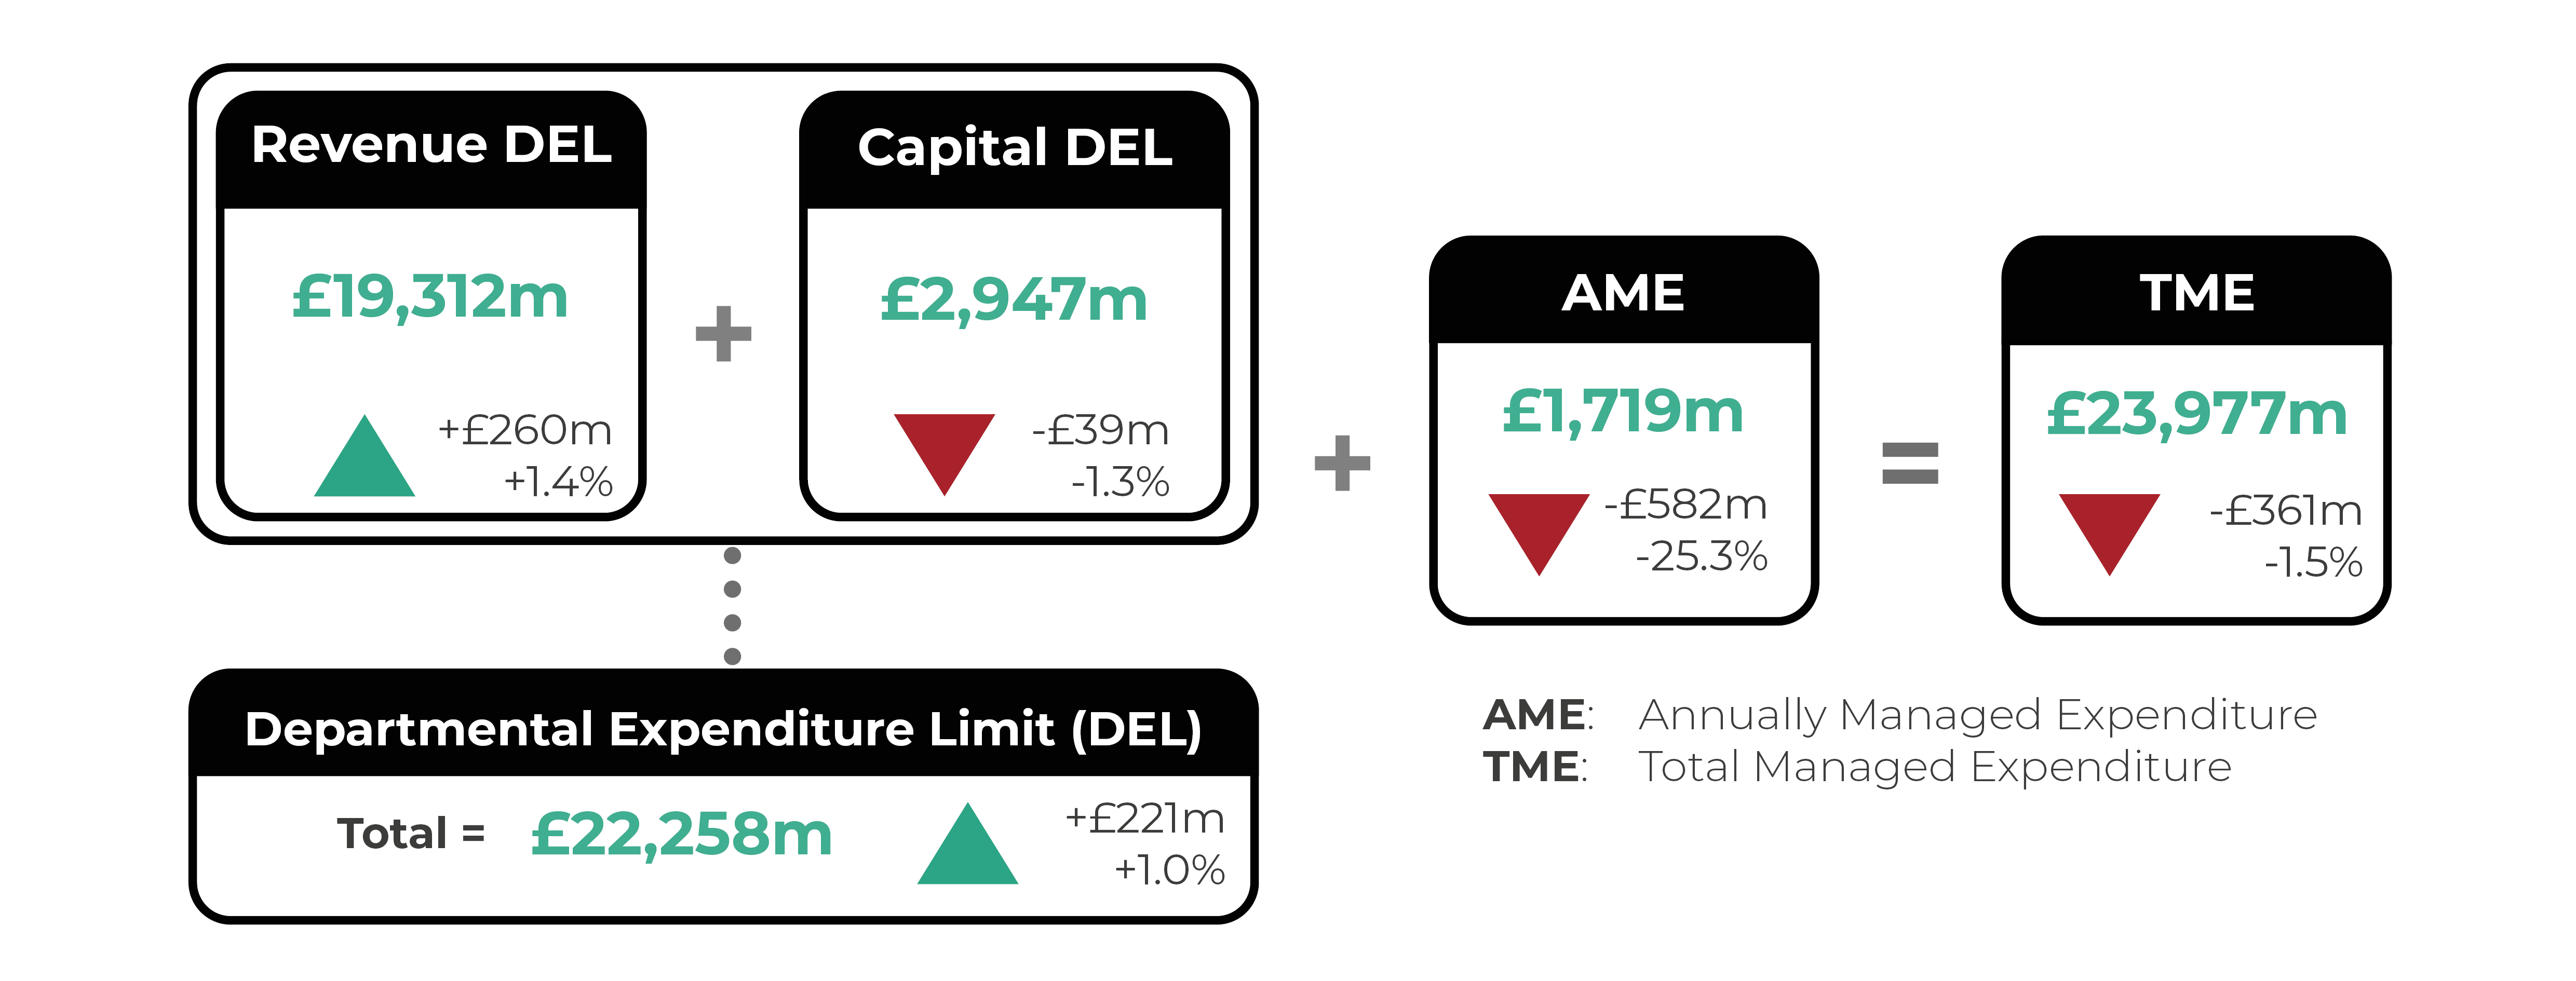 Revenue Departmental Expenditure Limit (DEL): £19312m (up by £260m or 1.4%). Capital DEL: £2947m (down by £39m or -1.3%). Total DEL: £22258m (up by £221m or 1%). Annually Managed Expenditure (AME): £1719m (down by £582m or -25.3%). Total Managed Expenditure (TME): £23977m (down by £361m or -1.5%).